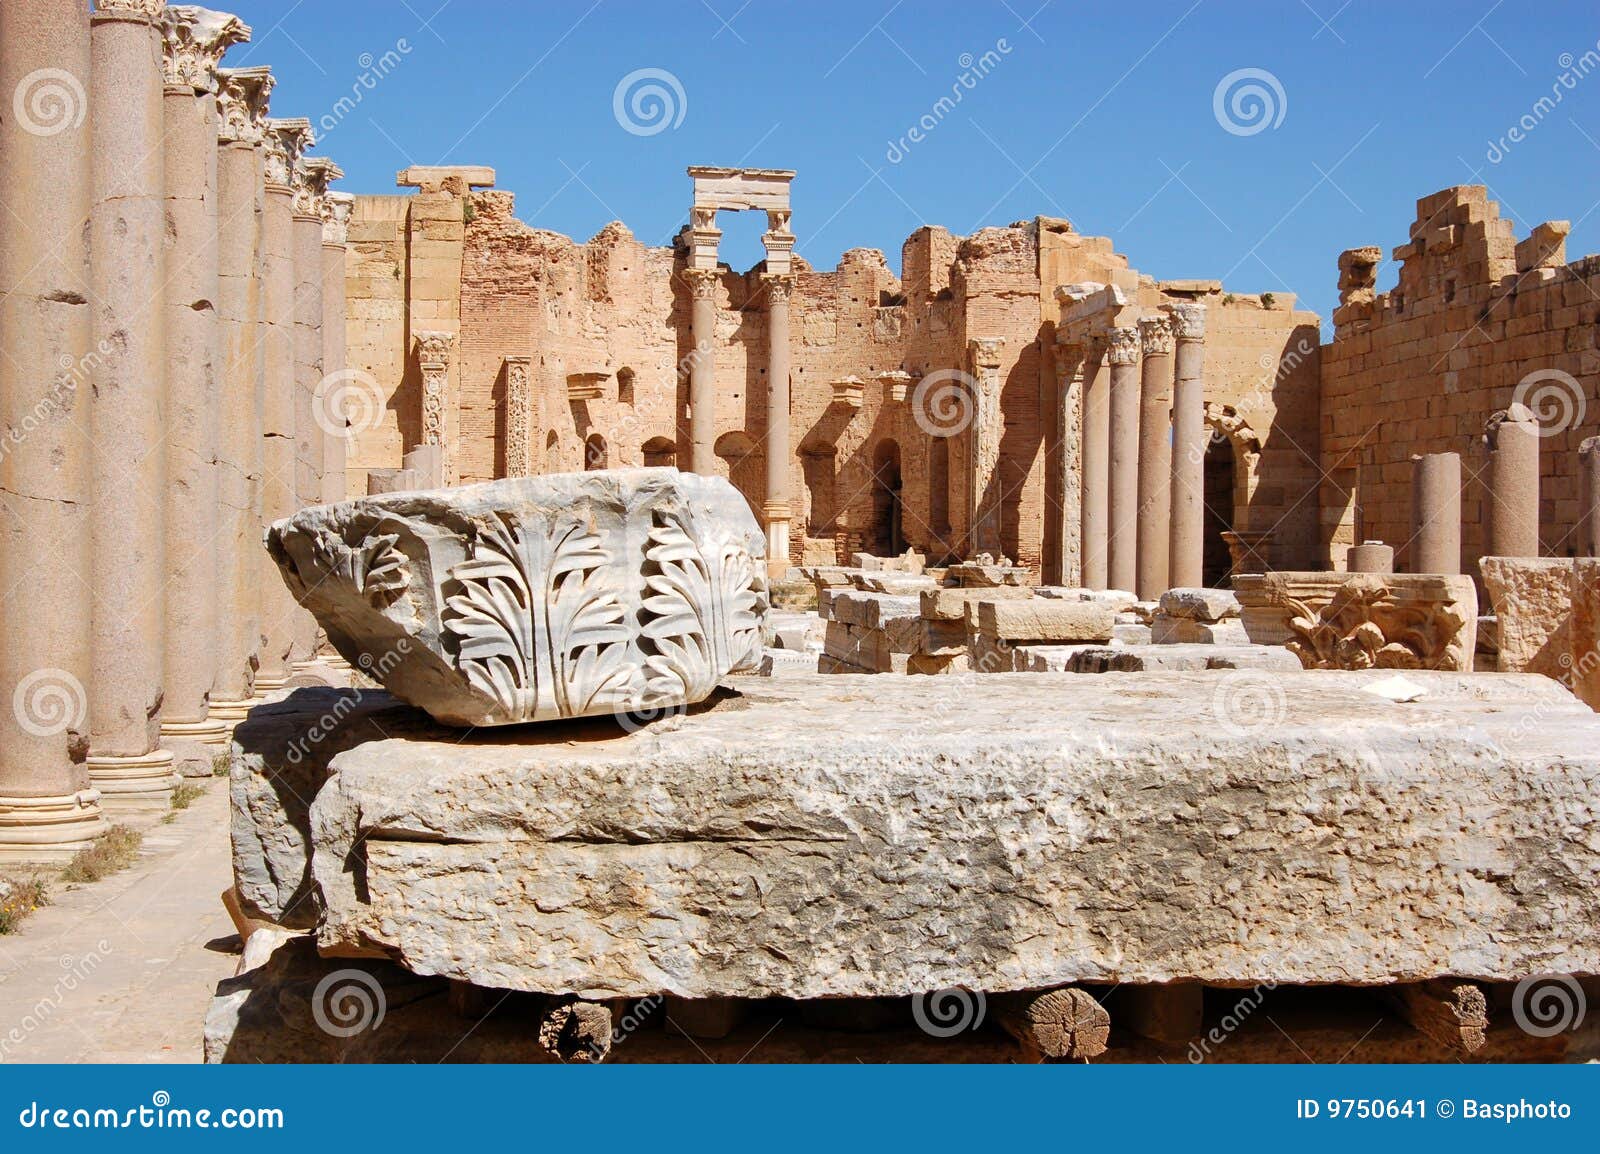 forum, leptis magna, libya